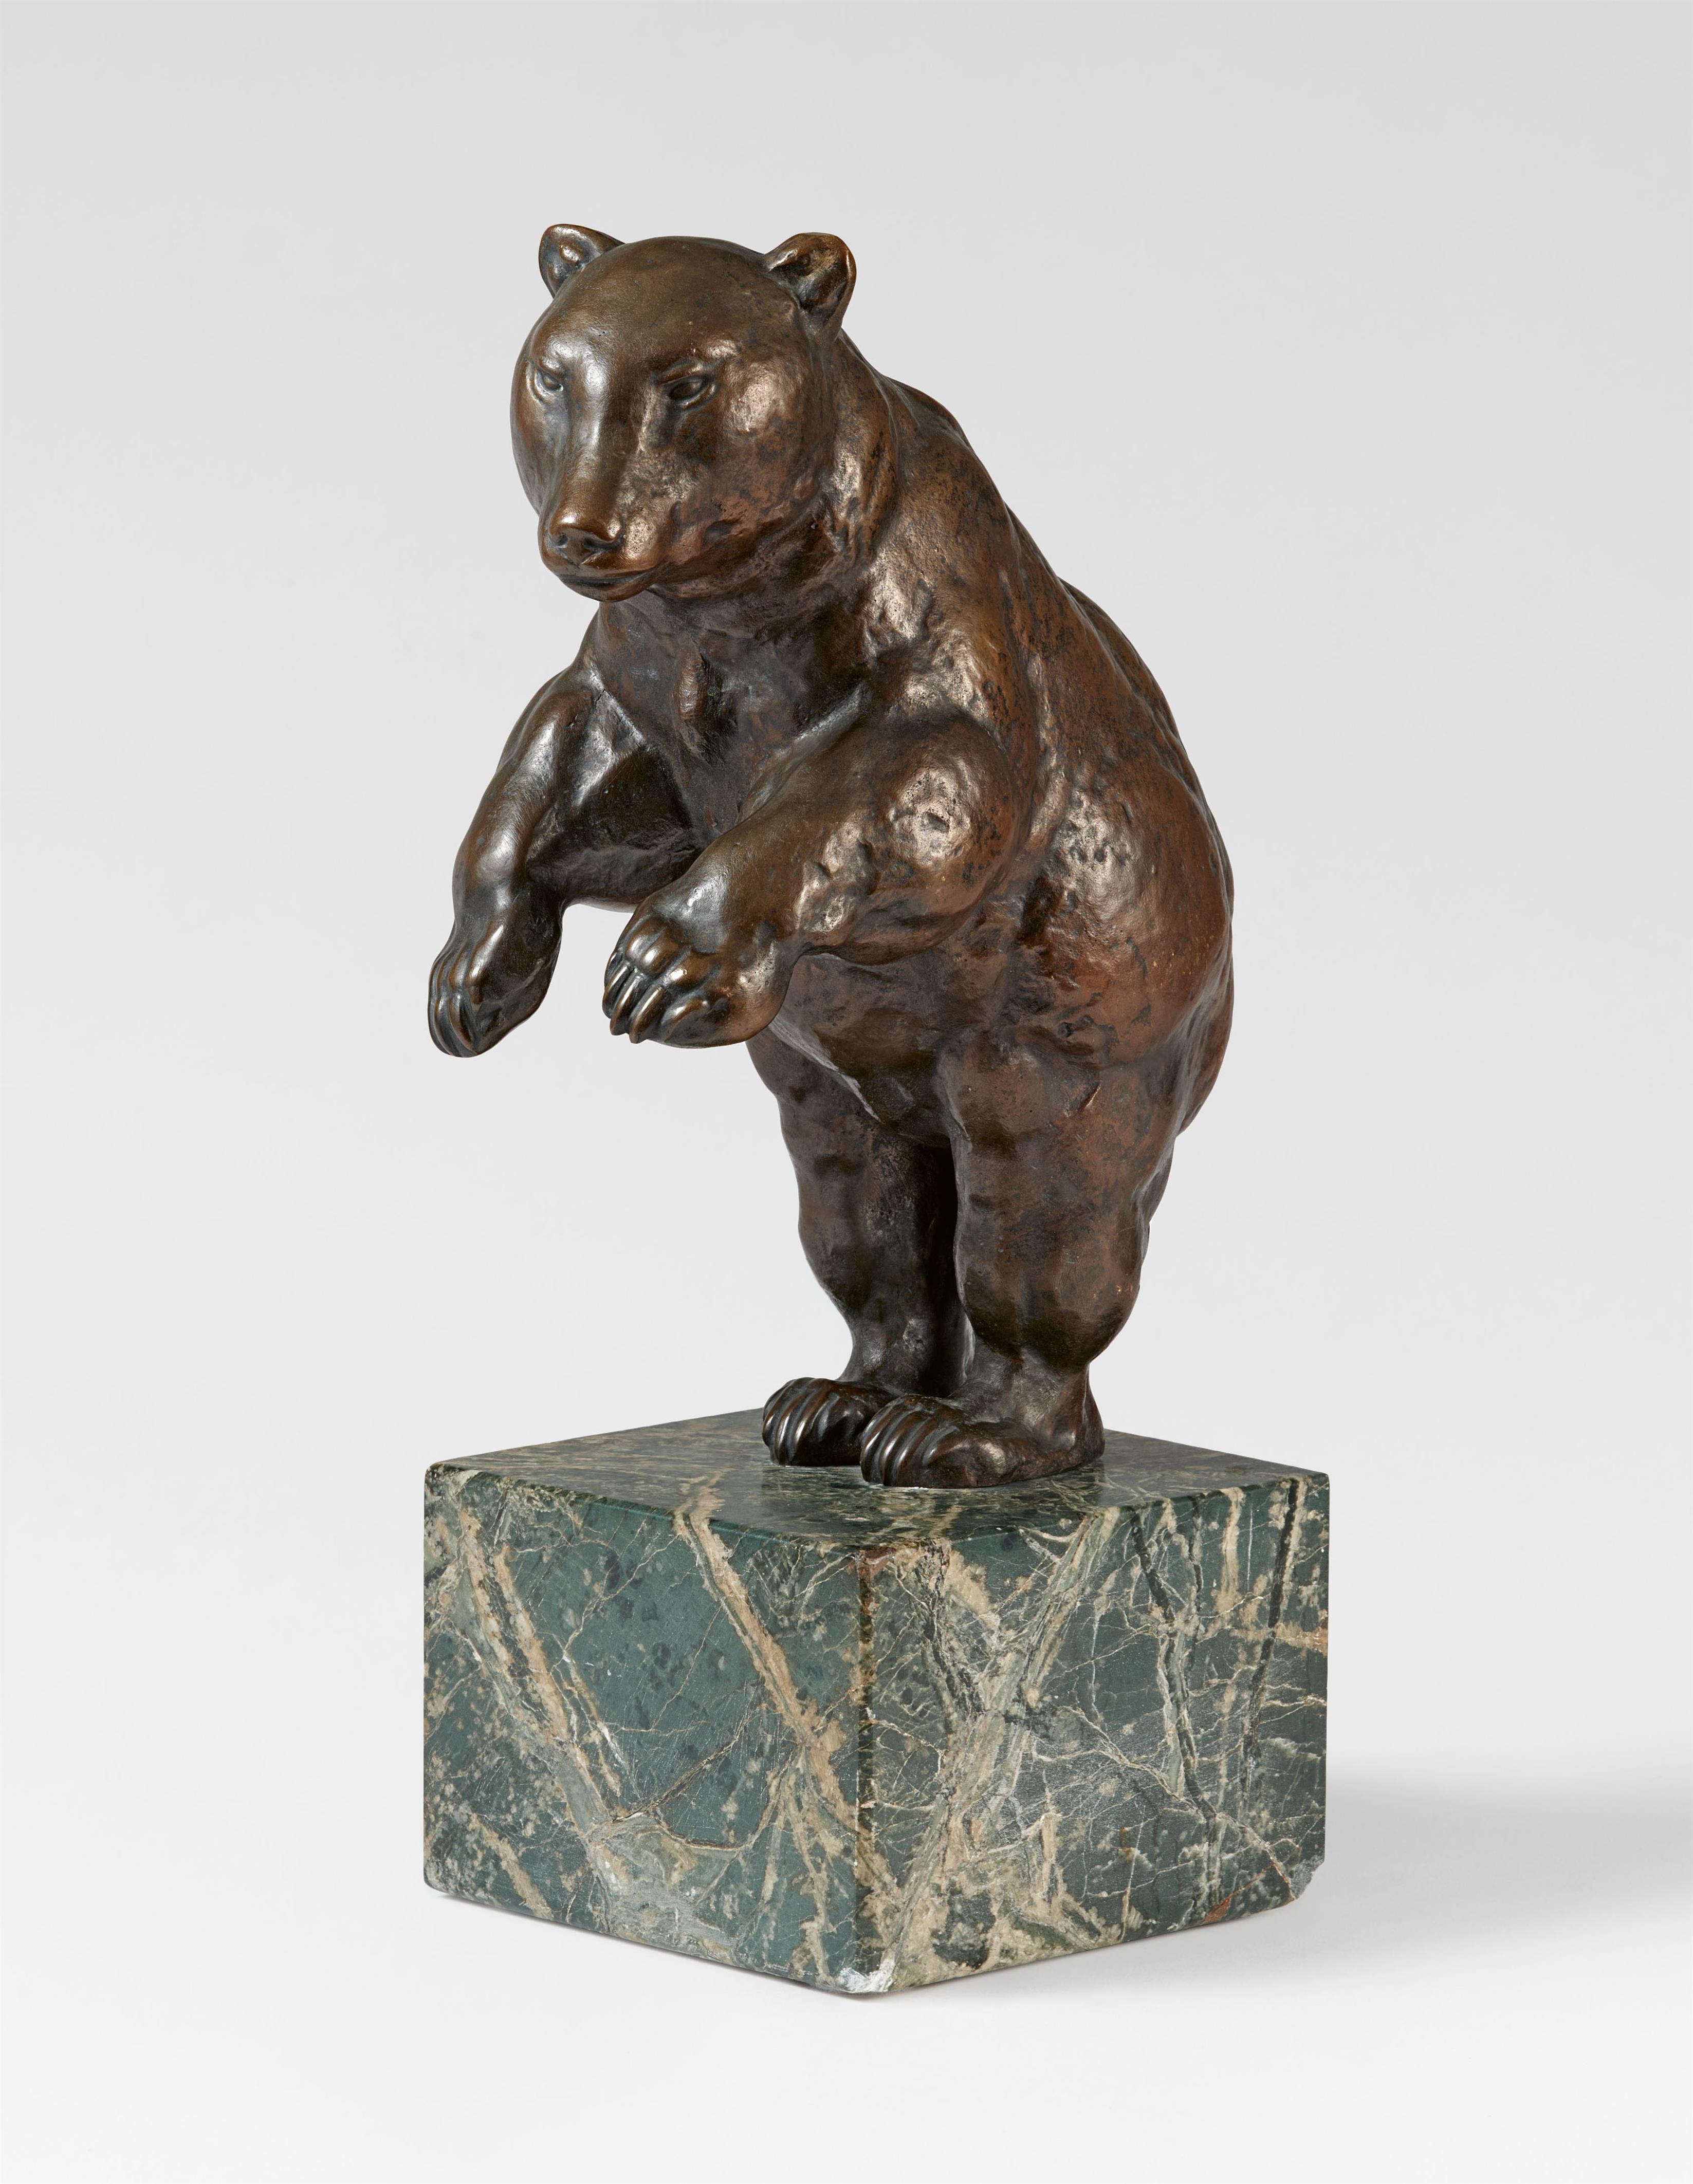 August Gaul - Standing bear - image-1